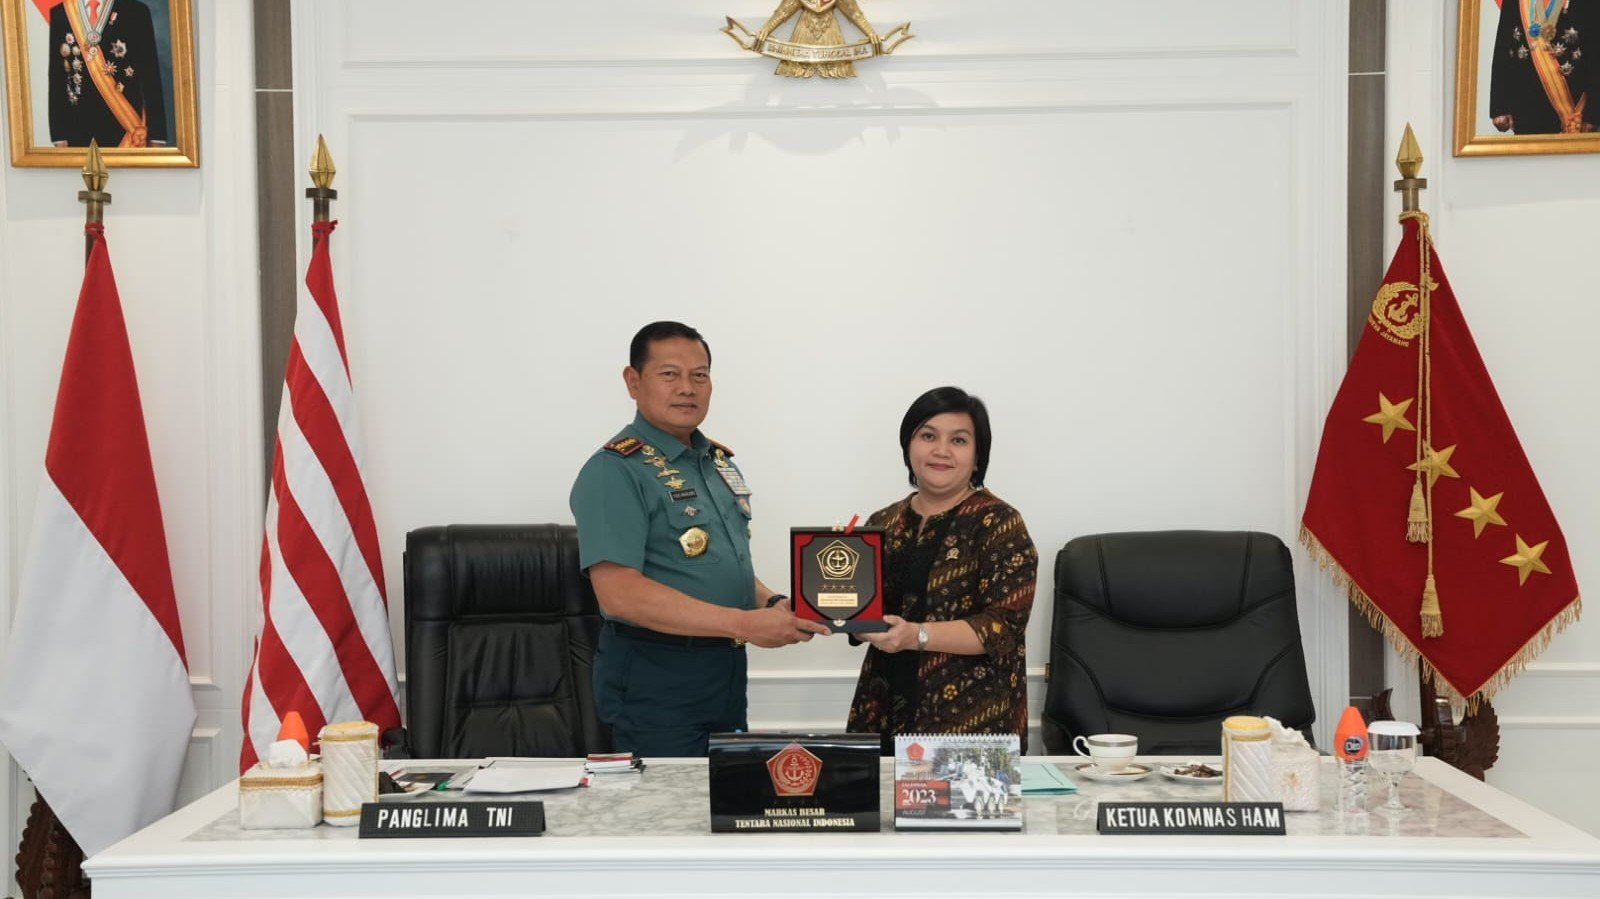 Panglima TNI Laksamana Yudo Margono bersama Ketua Komnas HAM Atnike Nova Sigiro(SinPo.id/ Puspen TNI)